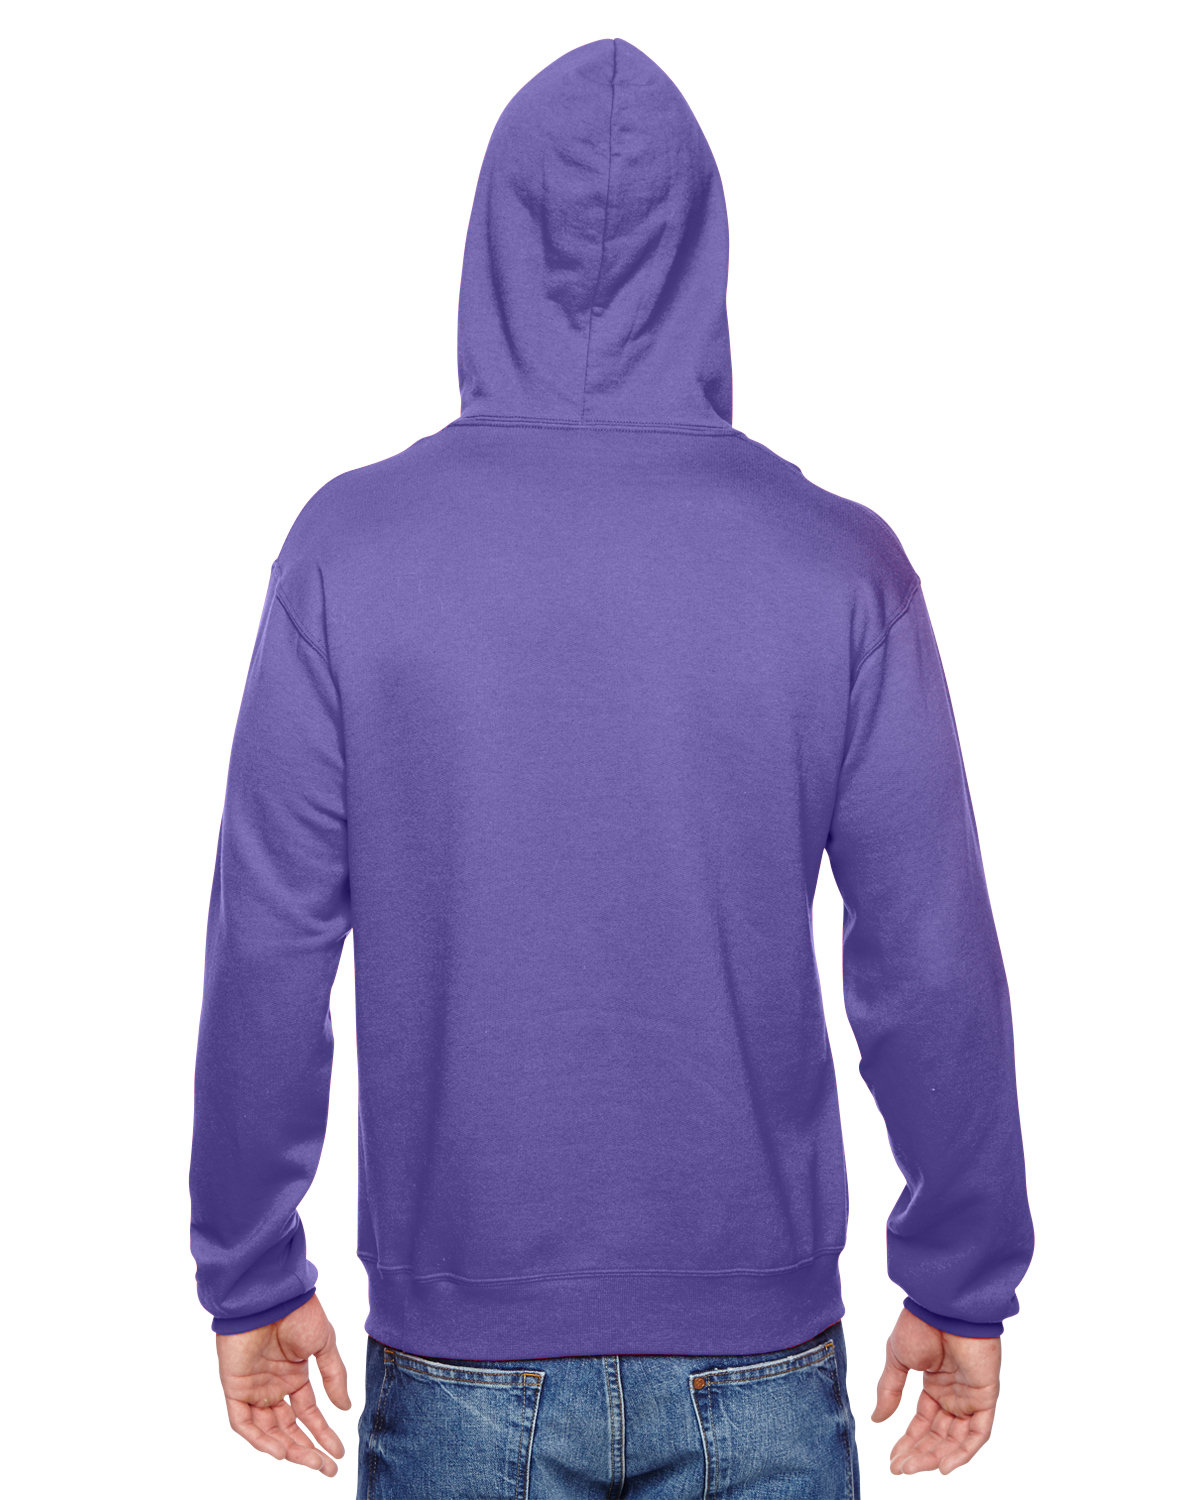 Fruit of the Loom Adult SofSpun® Hooded Sweatshirt | Generic Site - Priced